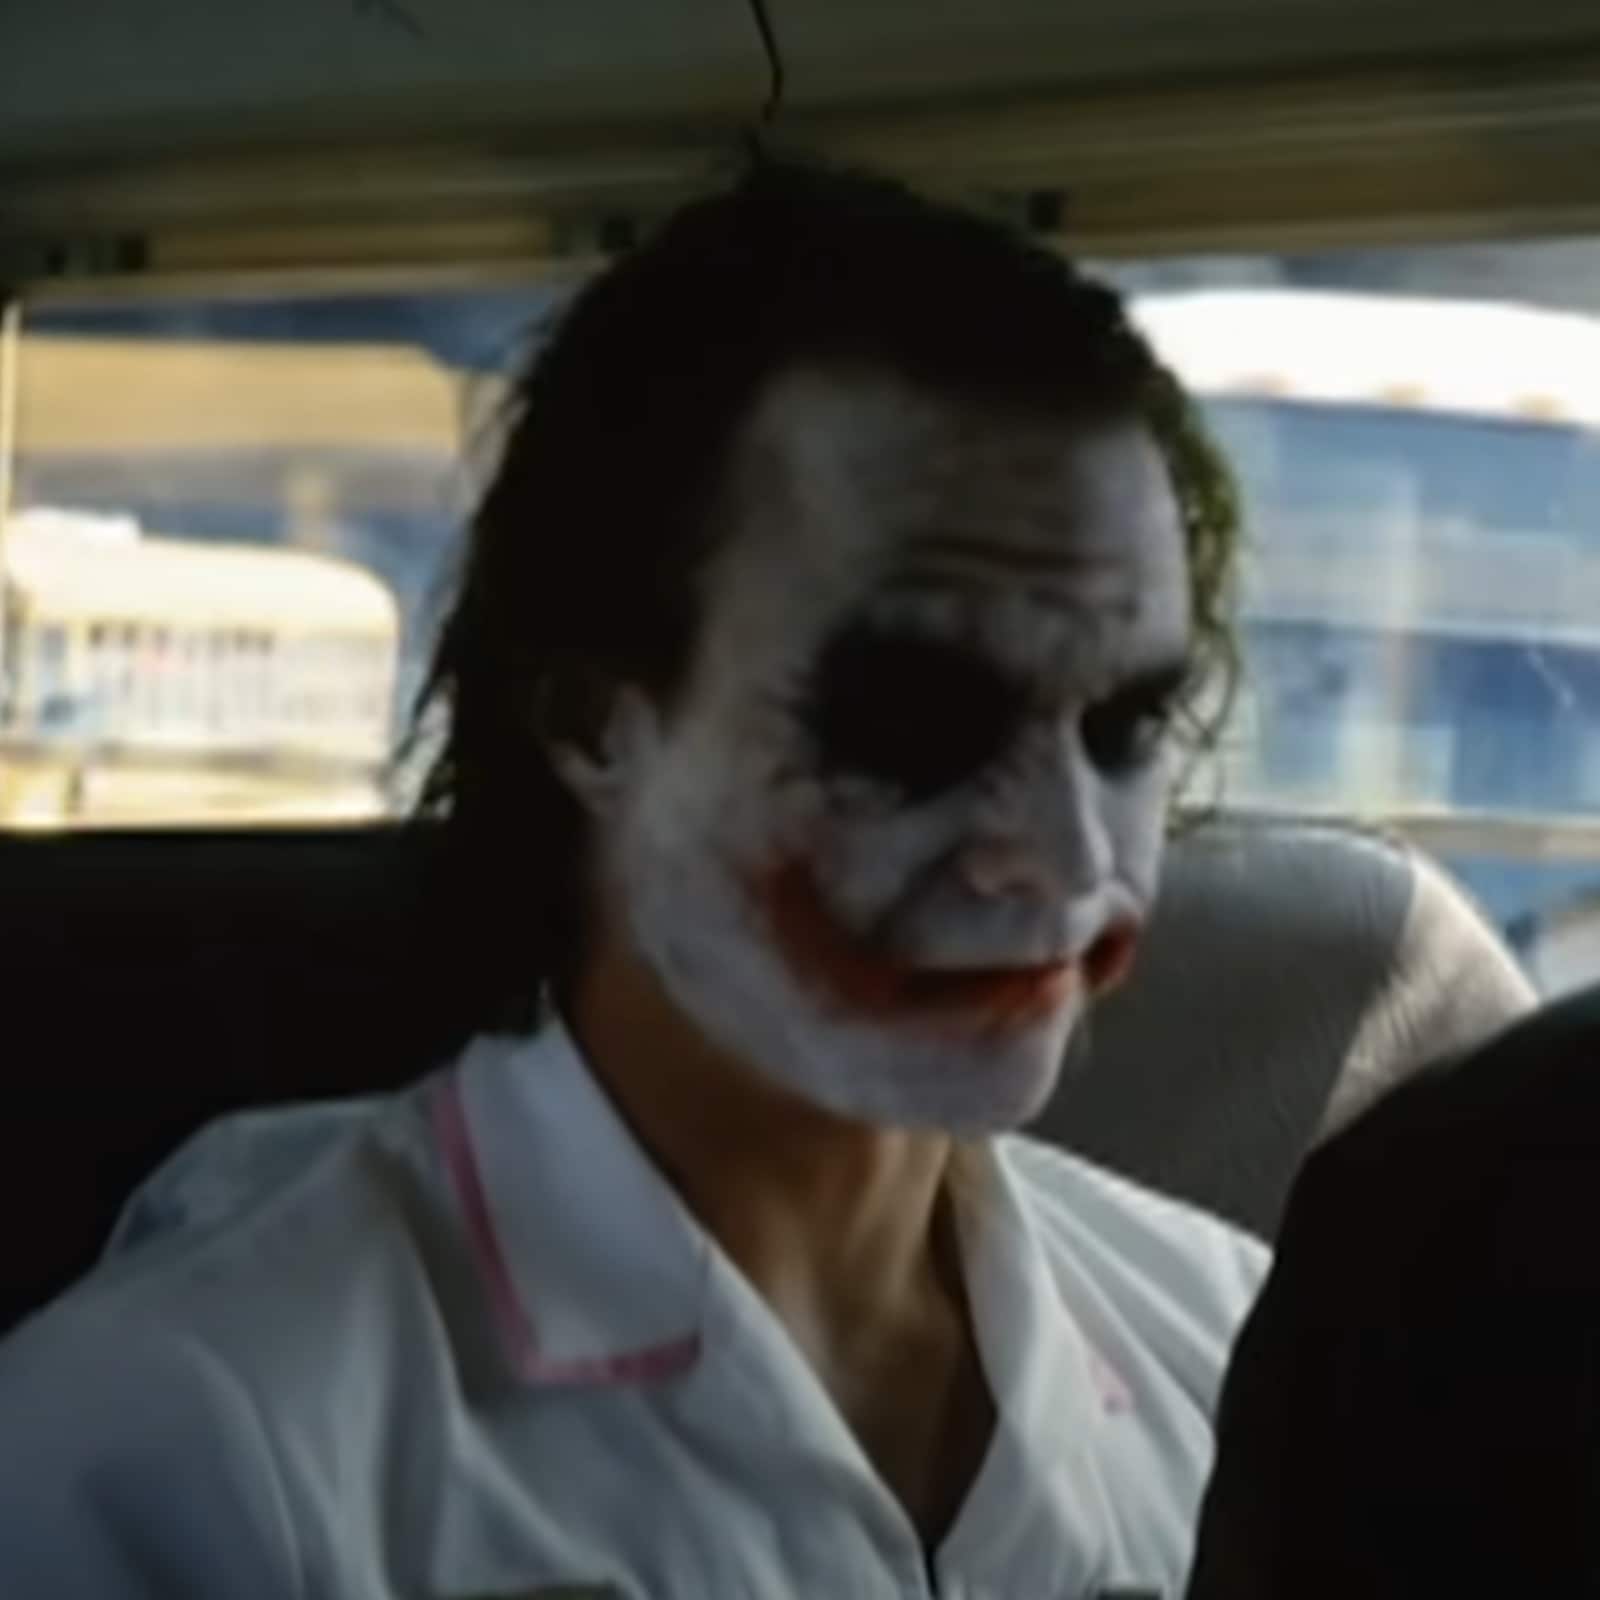 Deleted Batman Dark Knight Scene Reminds Fans How 'Disturbing' Heath  Ledger's Joker Was